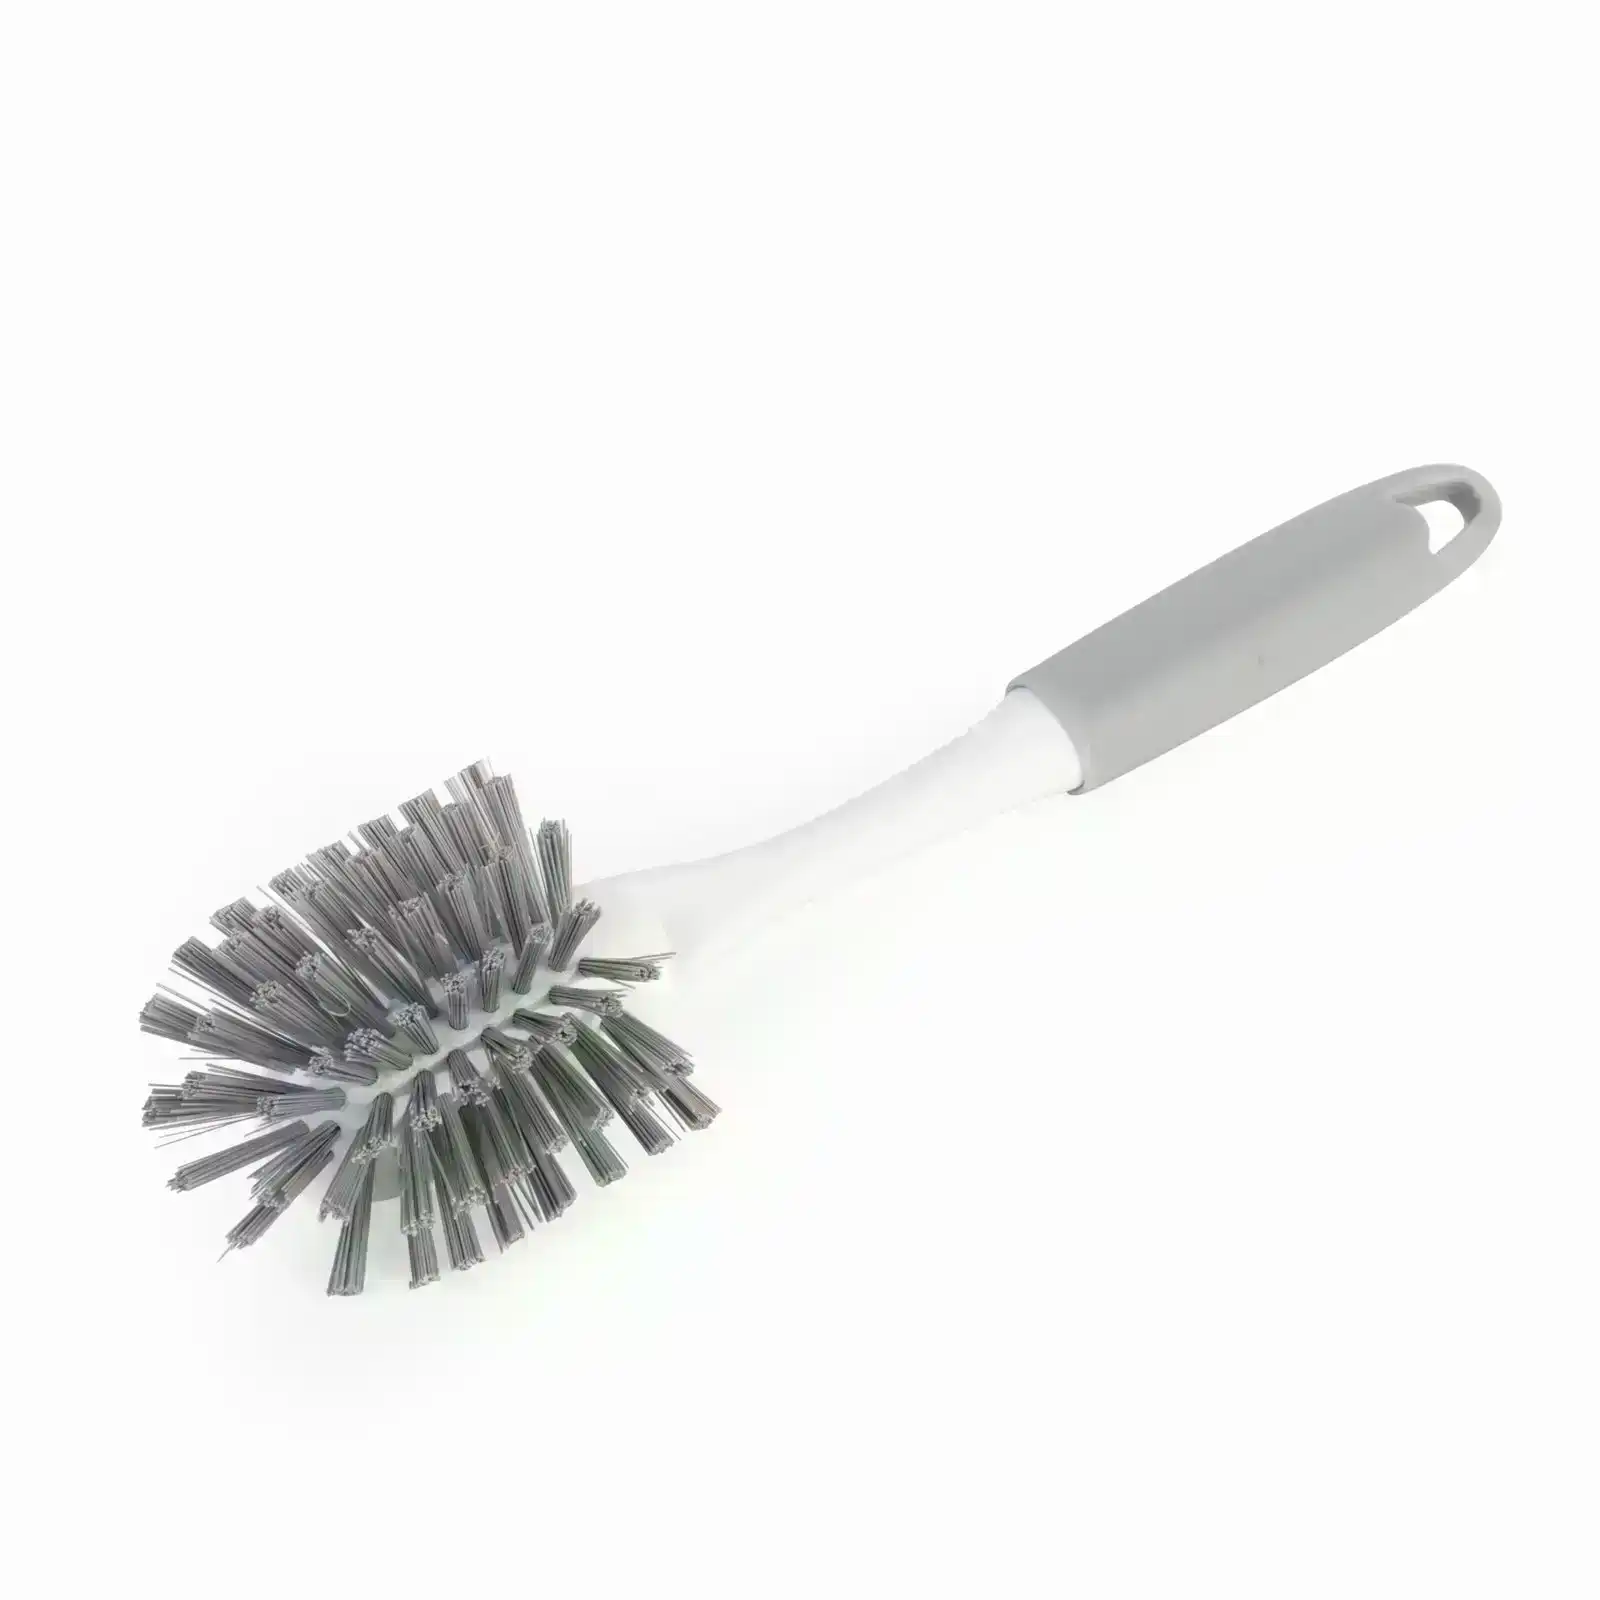 Beldray Antibac Dish Brush, Treated with Antibac Protection x3 pc